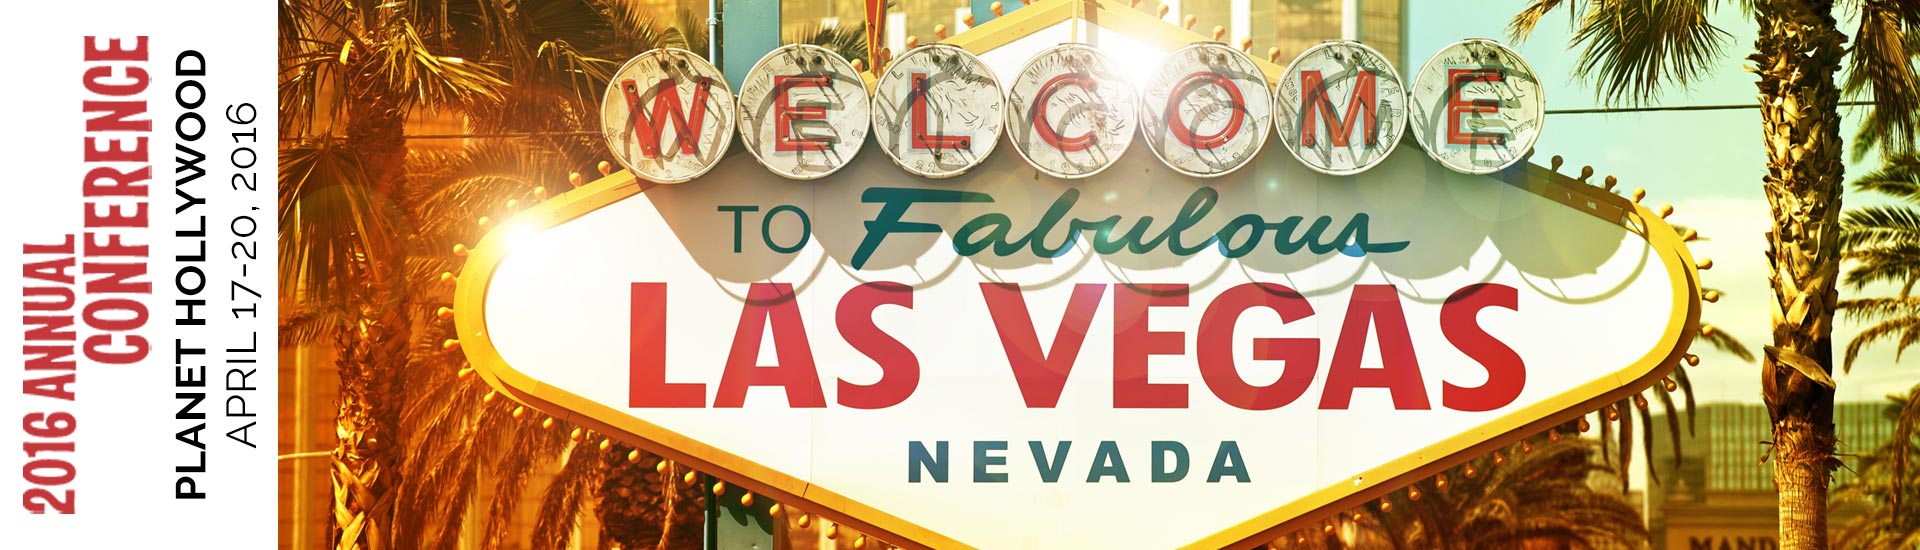 2016 Annual Conference • Las Vegas, Nevada • April 17-20